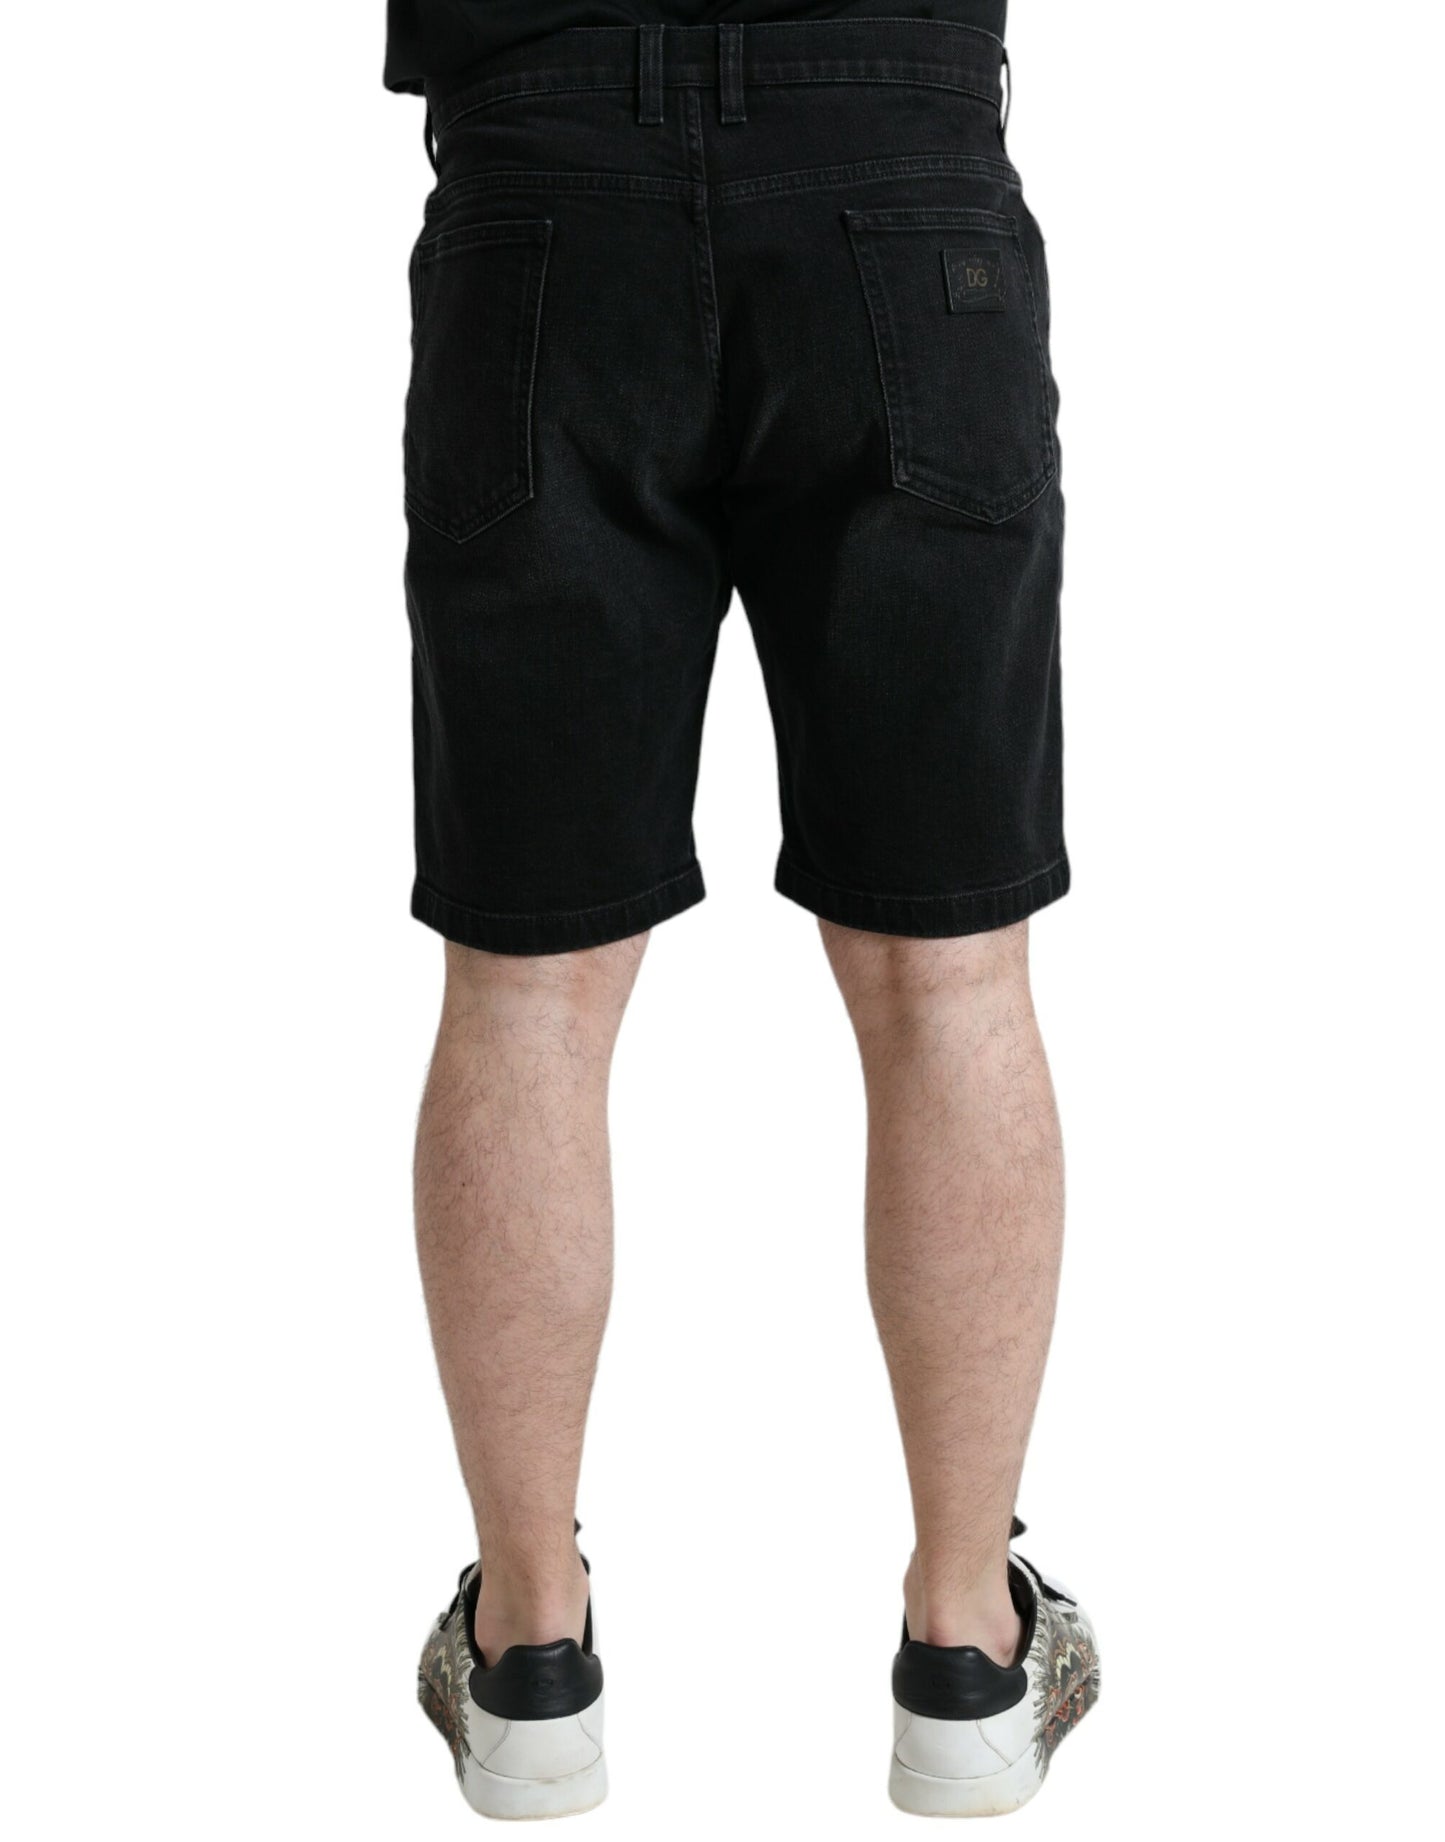 Chic Black Bermuda Denim Shorts